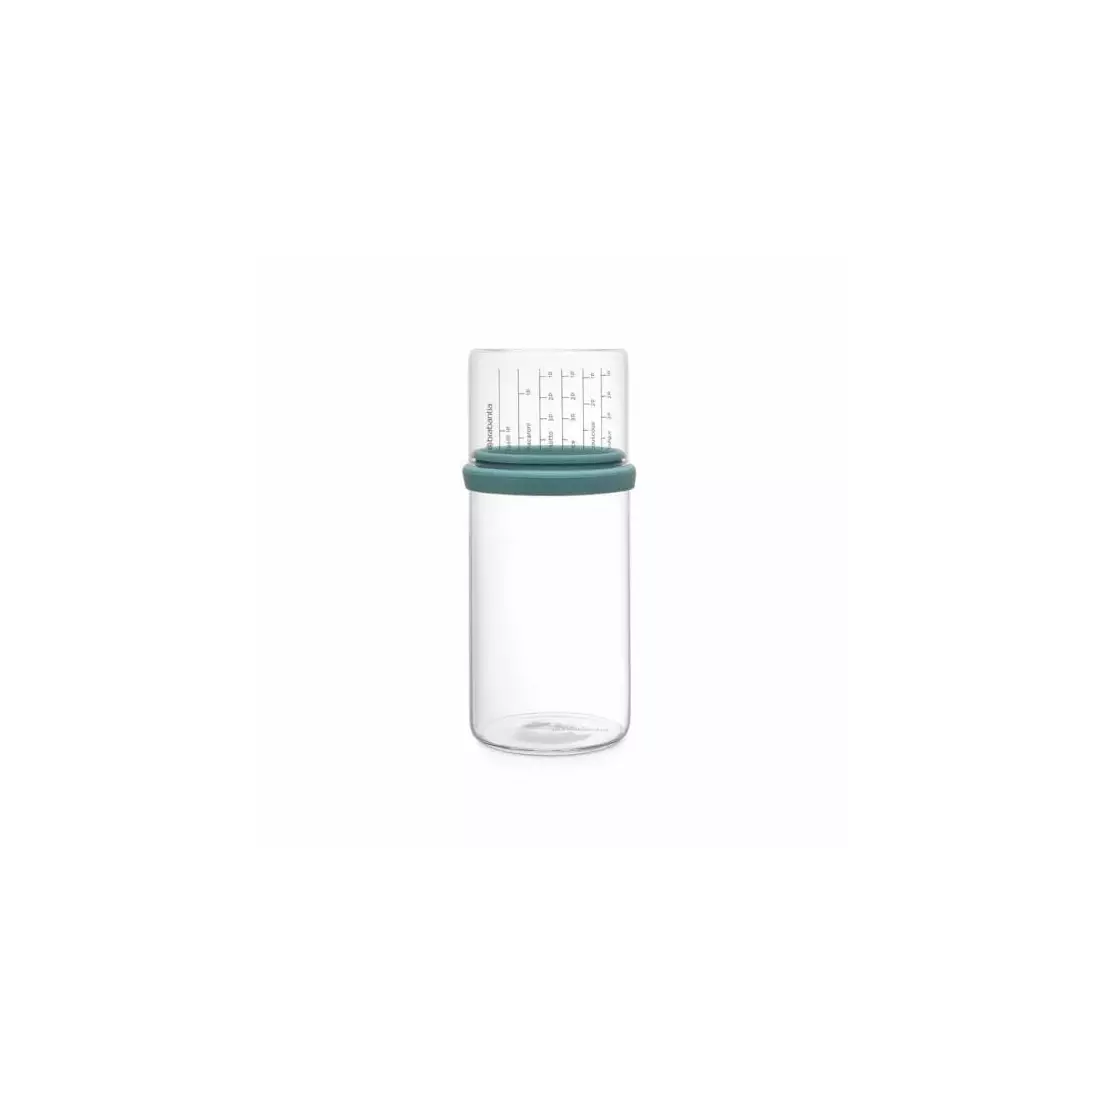 BRABANTIA glass measuring cup 1L, mint